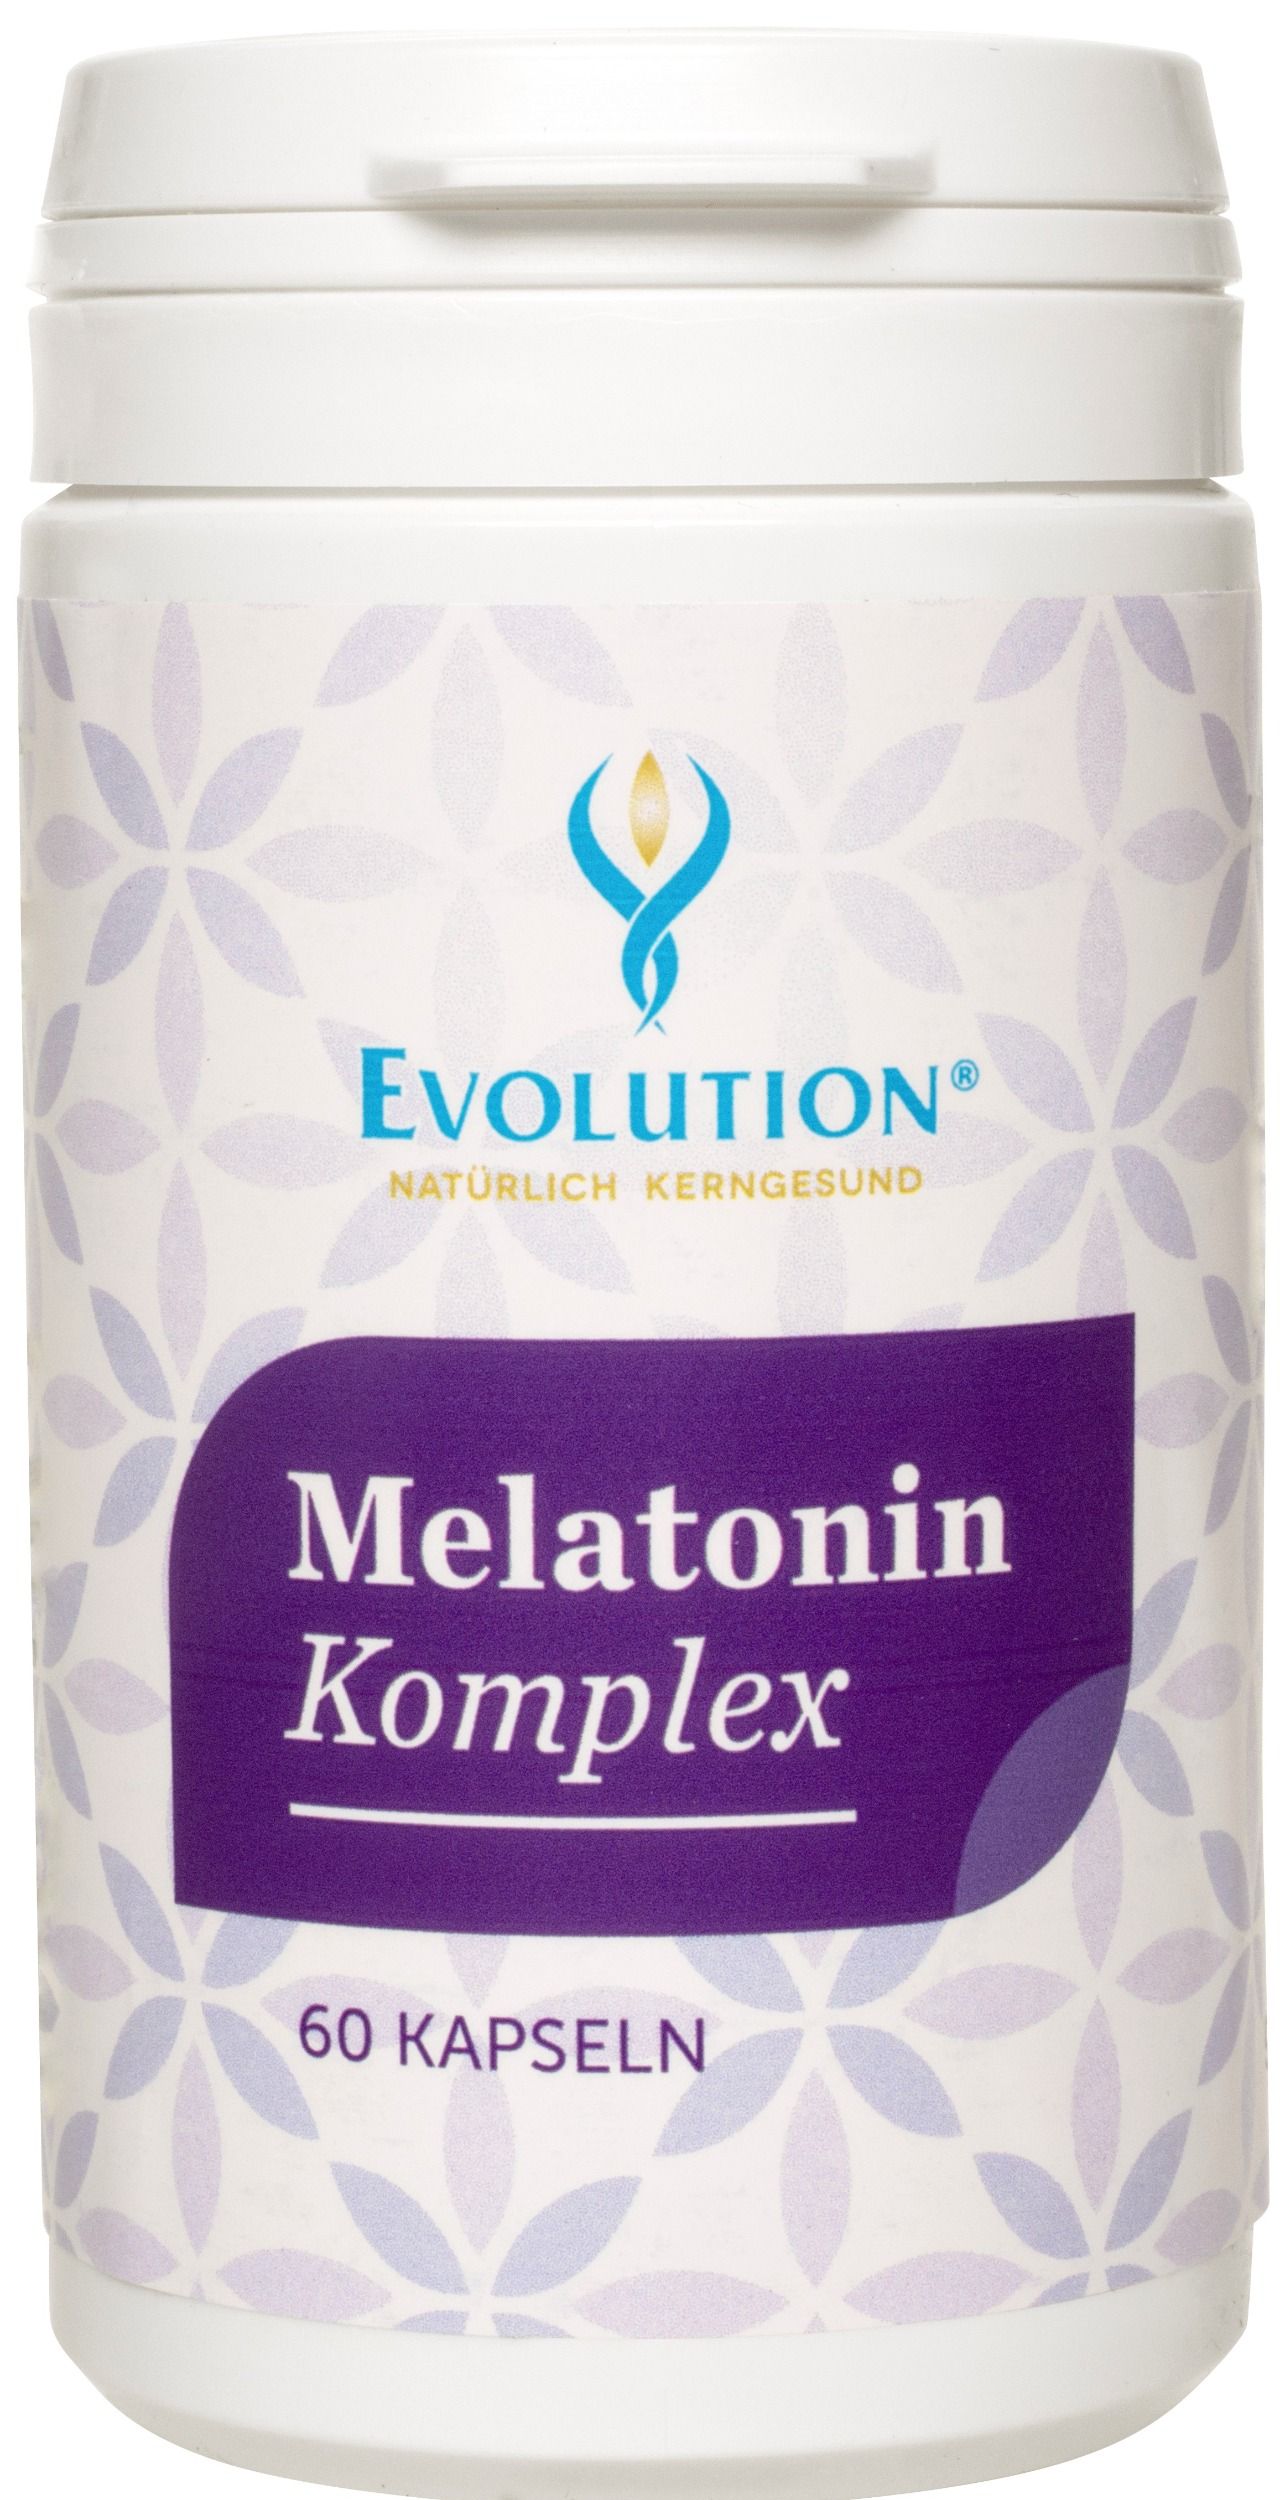 Melatonin Komplex